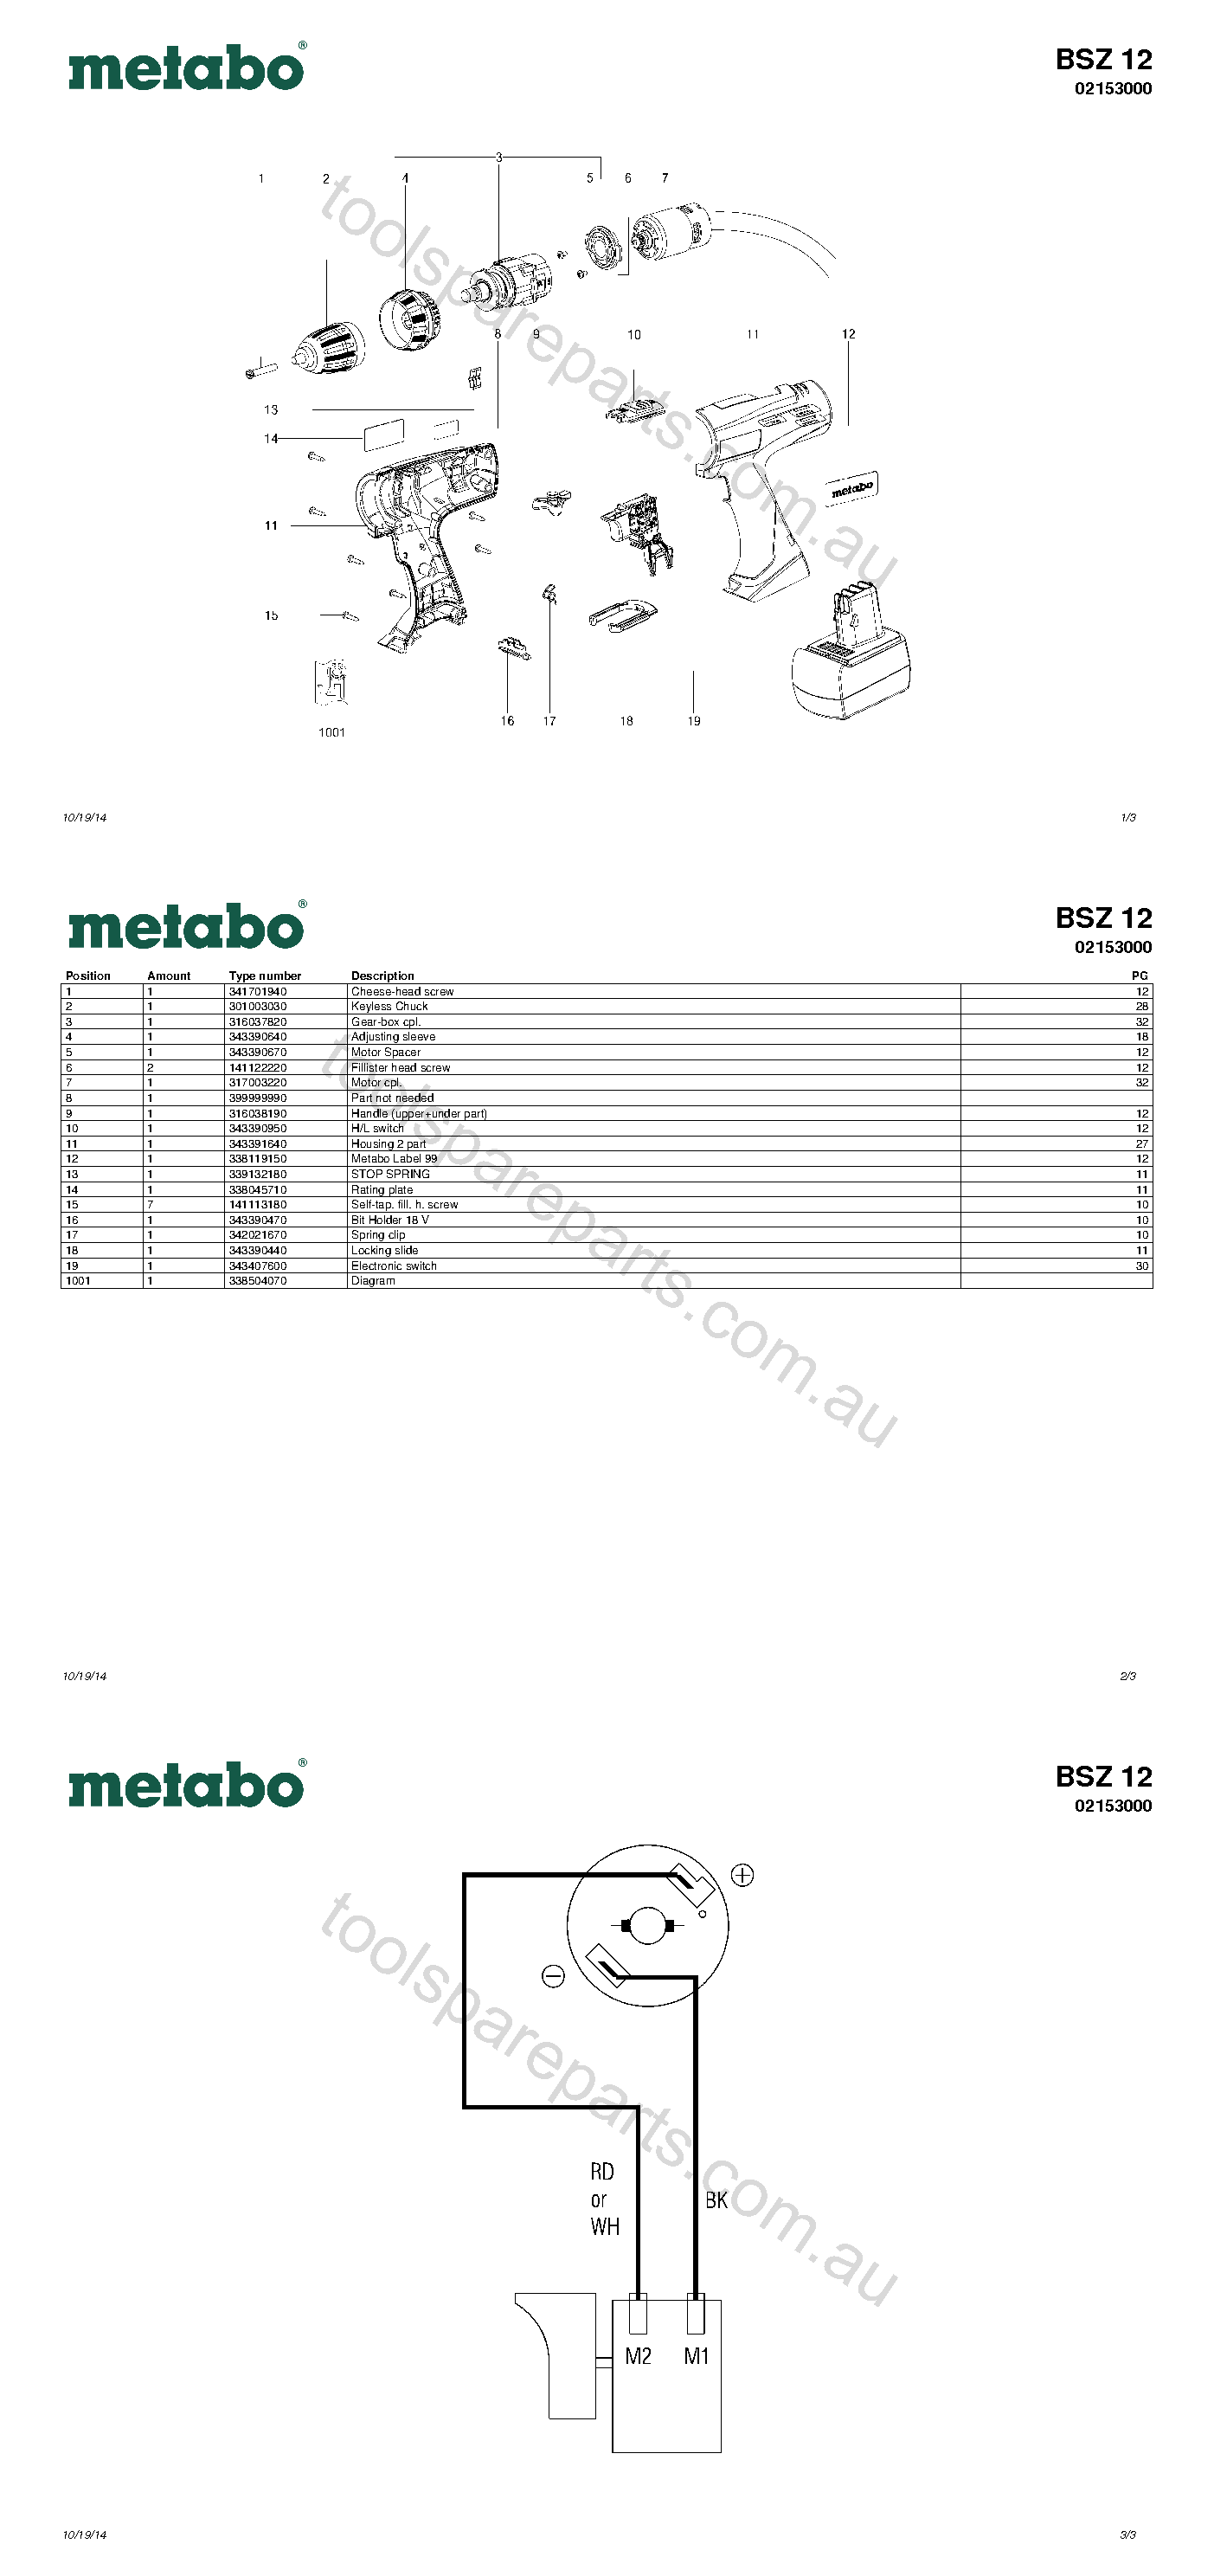 Metabo BSZ 12 02153000  Diagram 1